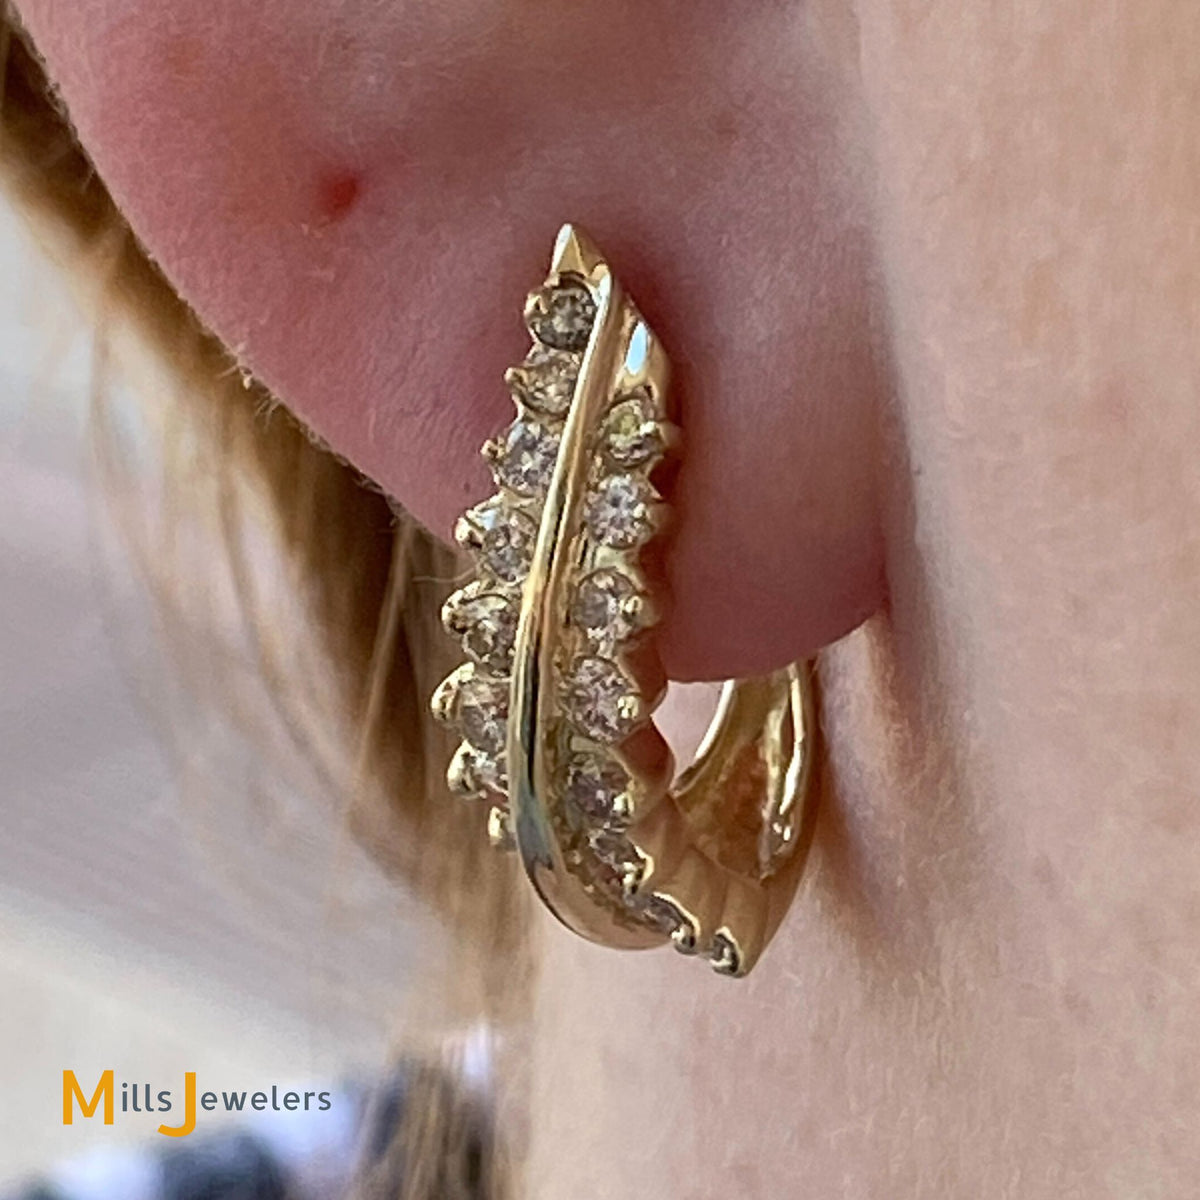 Mini Diamond Hook Earring | 14K Gold | EF Collection 14K White Gold / Pair